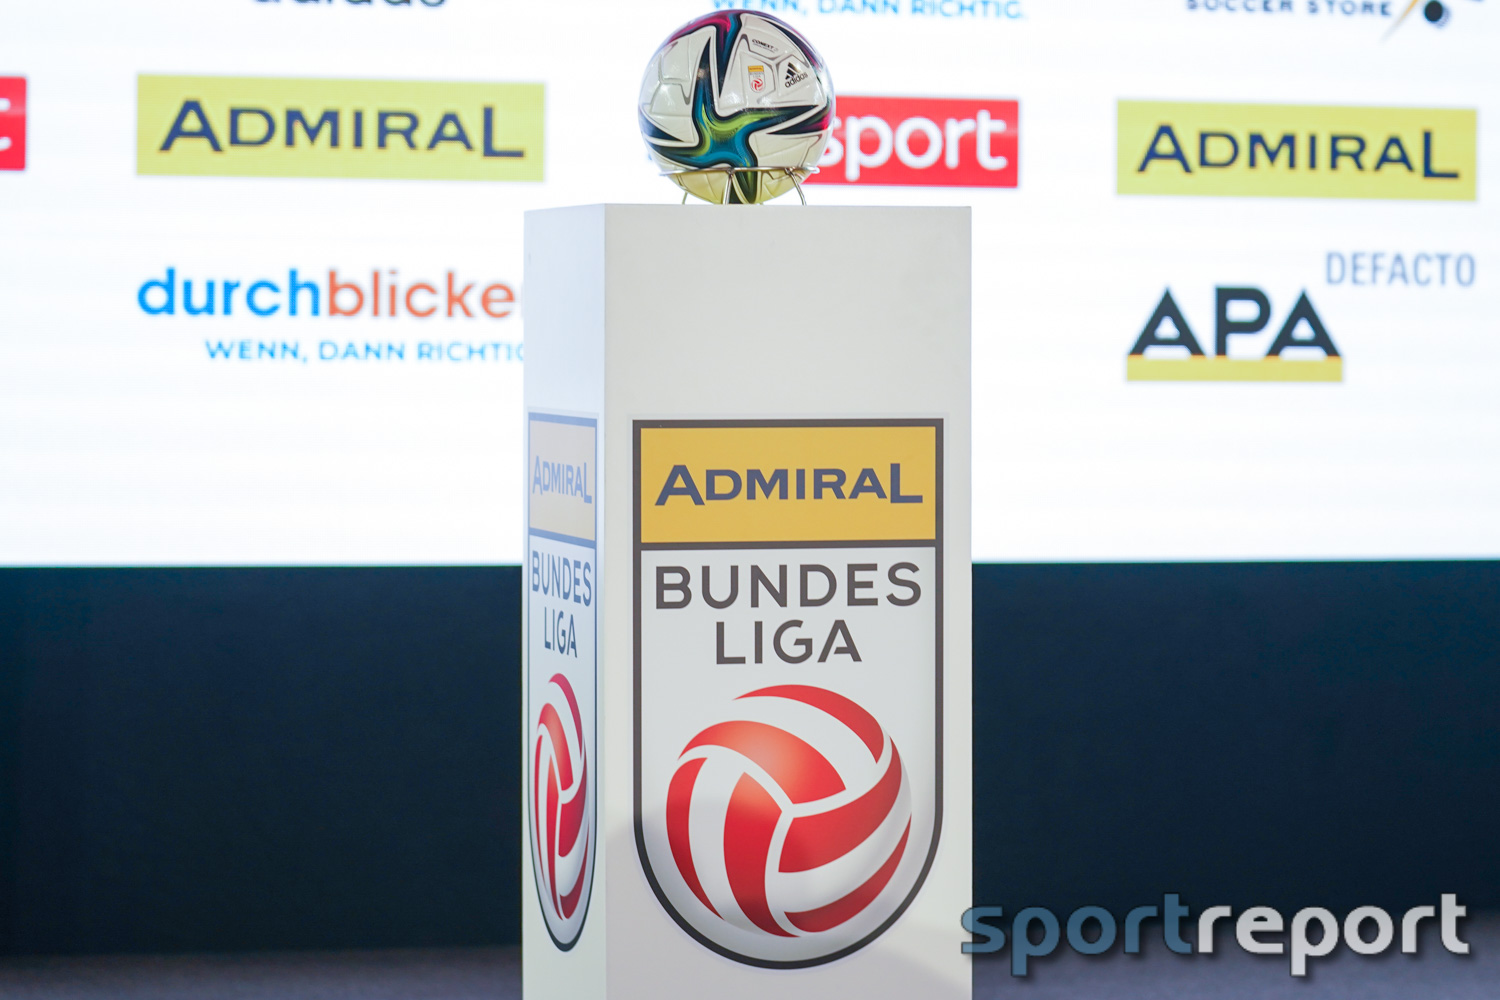 Bundesliga, Admiral Bundesliga, #AdmiralBL, #ASK, #HTB, #SVR